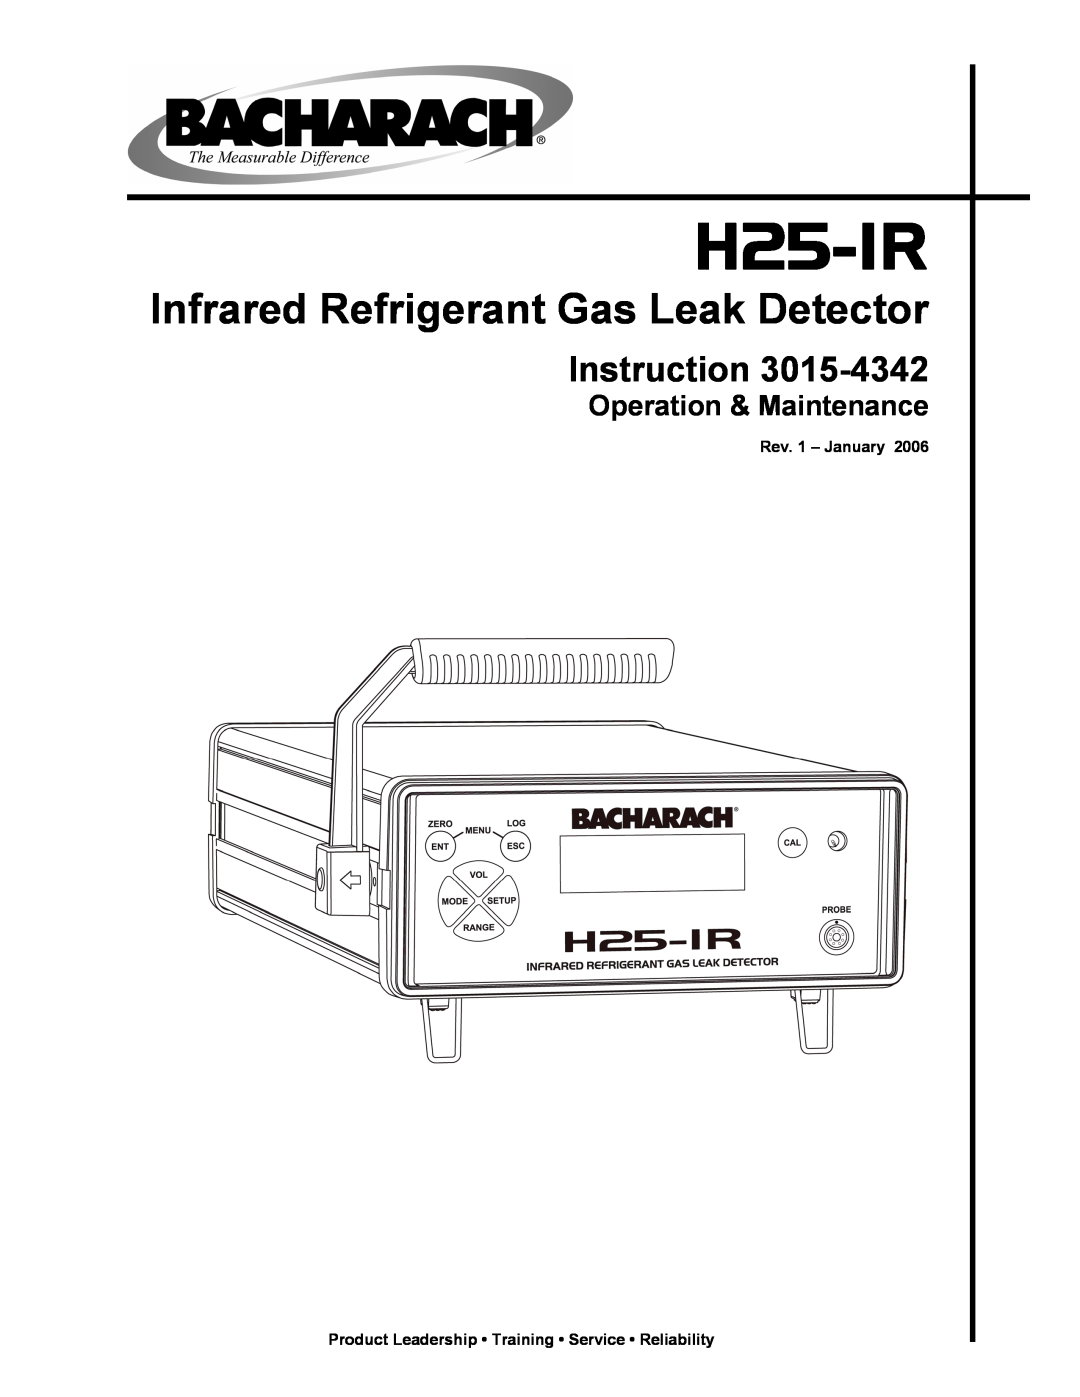 Bacharach H25-IR manual Infrared Refrigerant Gas Leak Detector, Instruction, Operation & Maintenance, Rev. 1 - January 